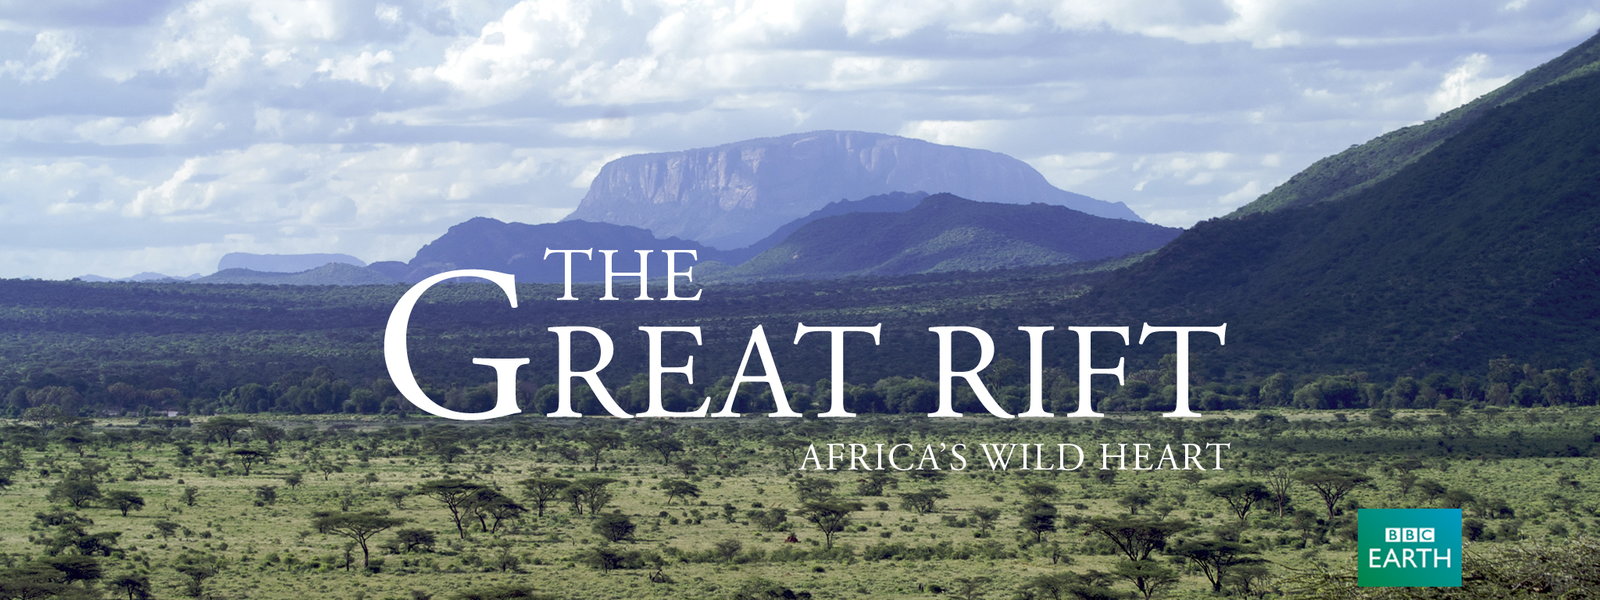 دانلود فیلم مستند The Great Rift Africas Wild Heart 2010